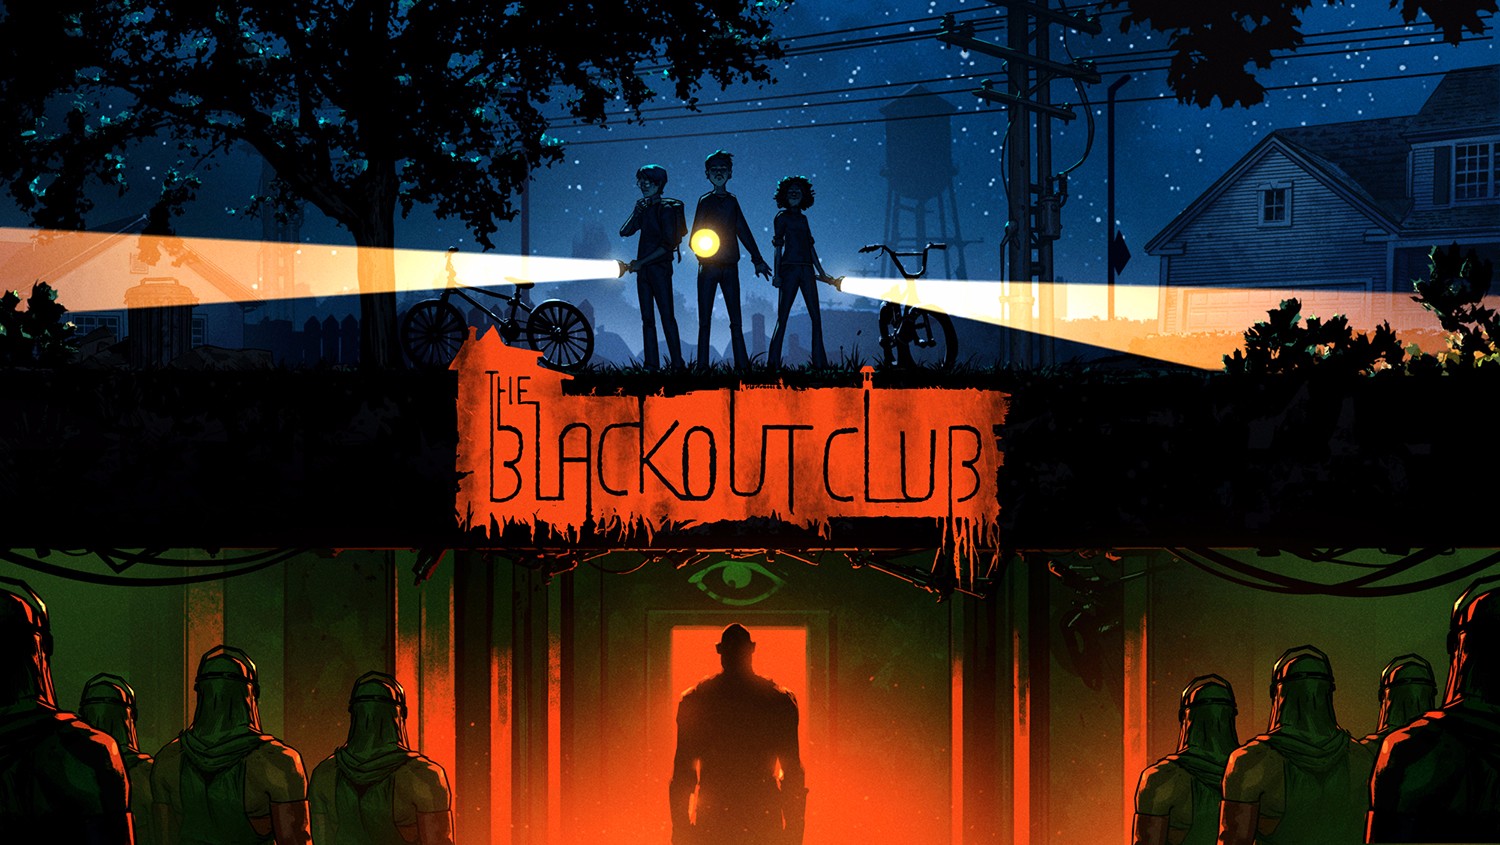 Blackout+Club+Art 副本.JPG